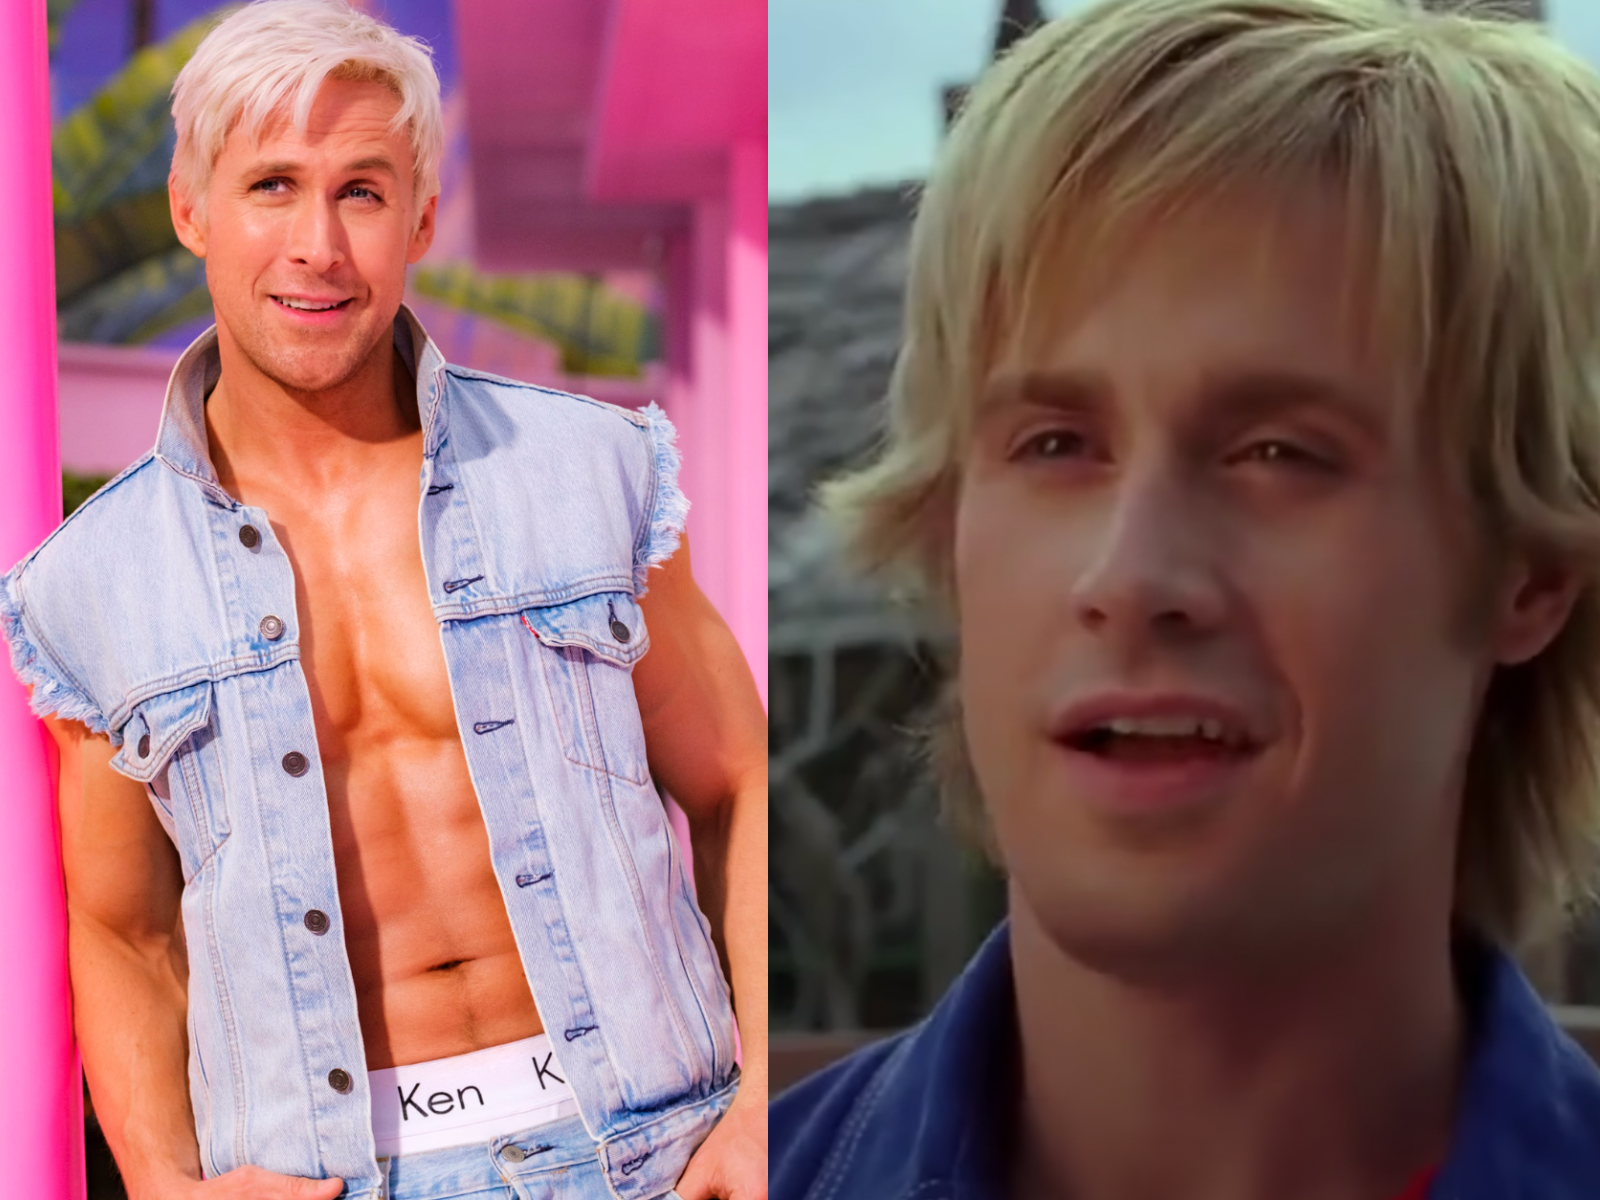 I dressed up like Ryan Gosling playing Ken in new Barbie film